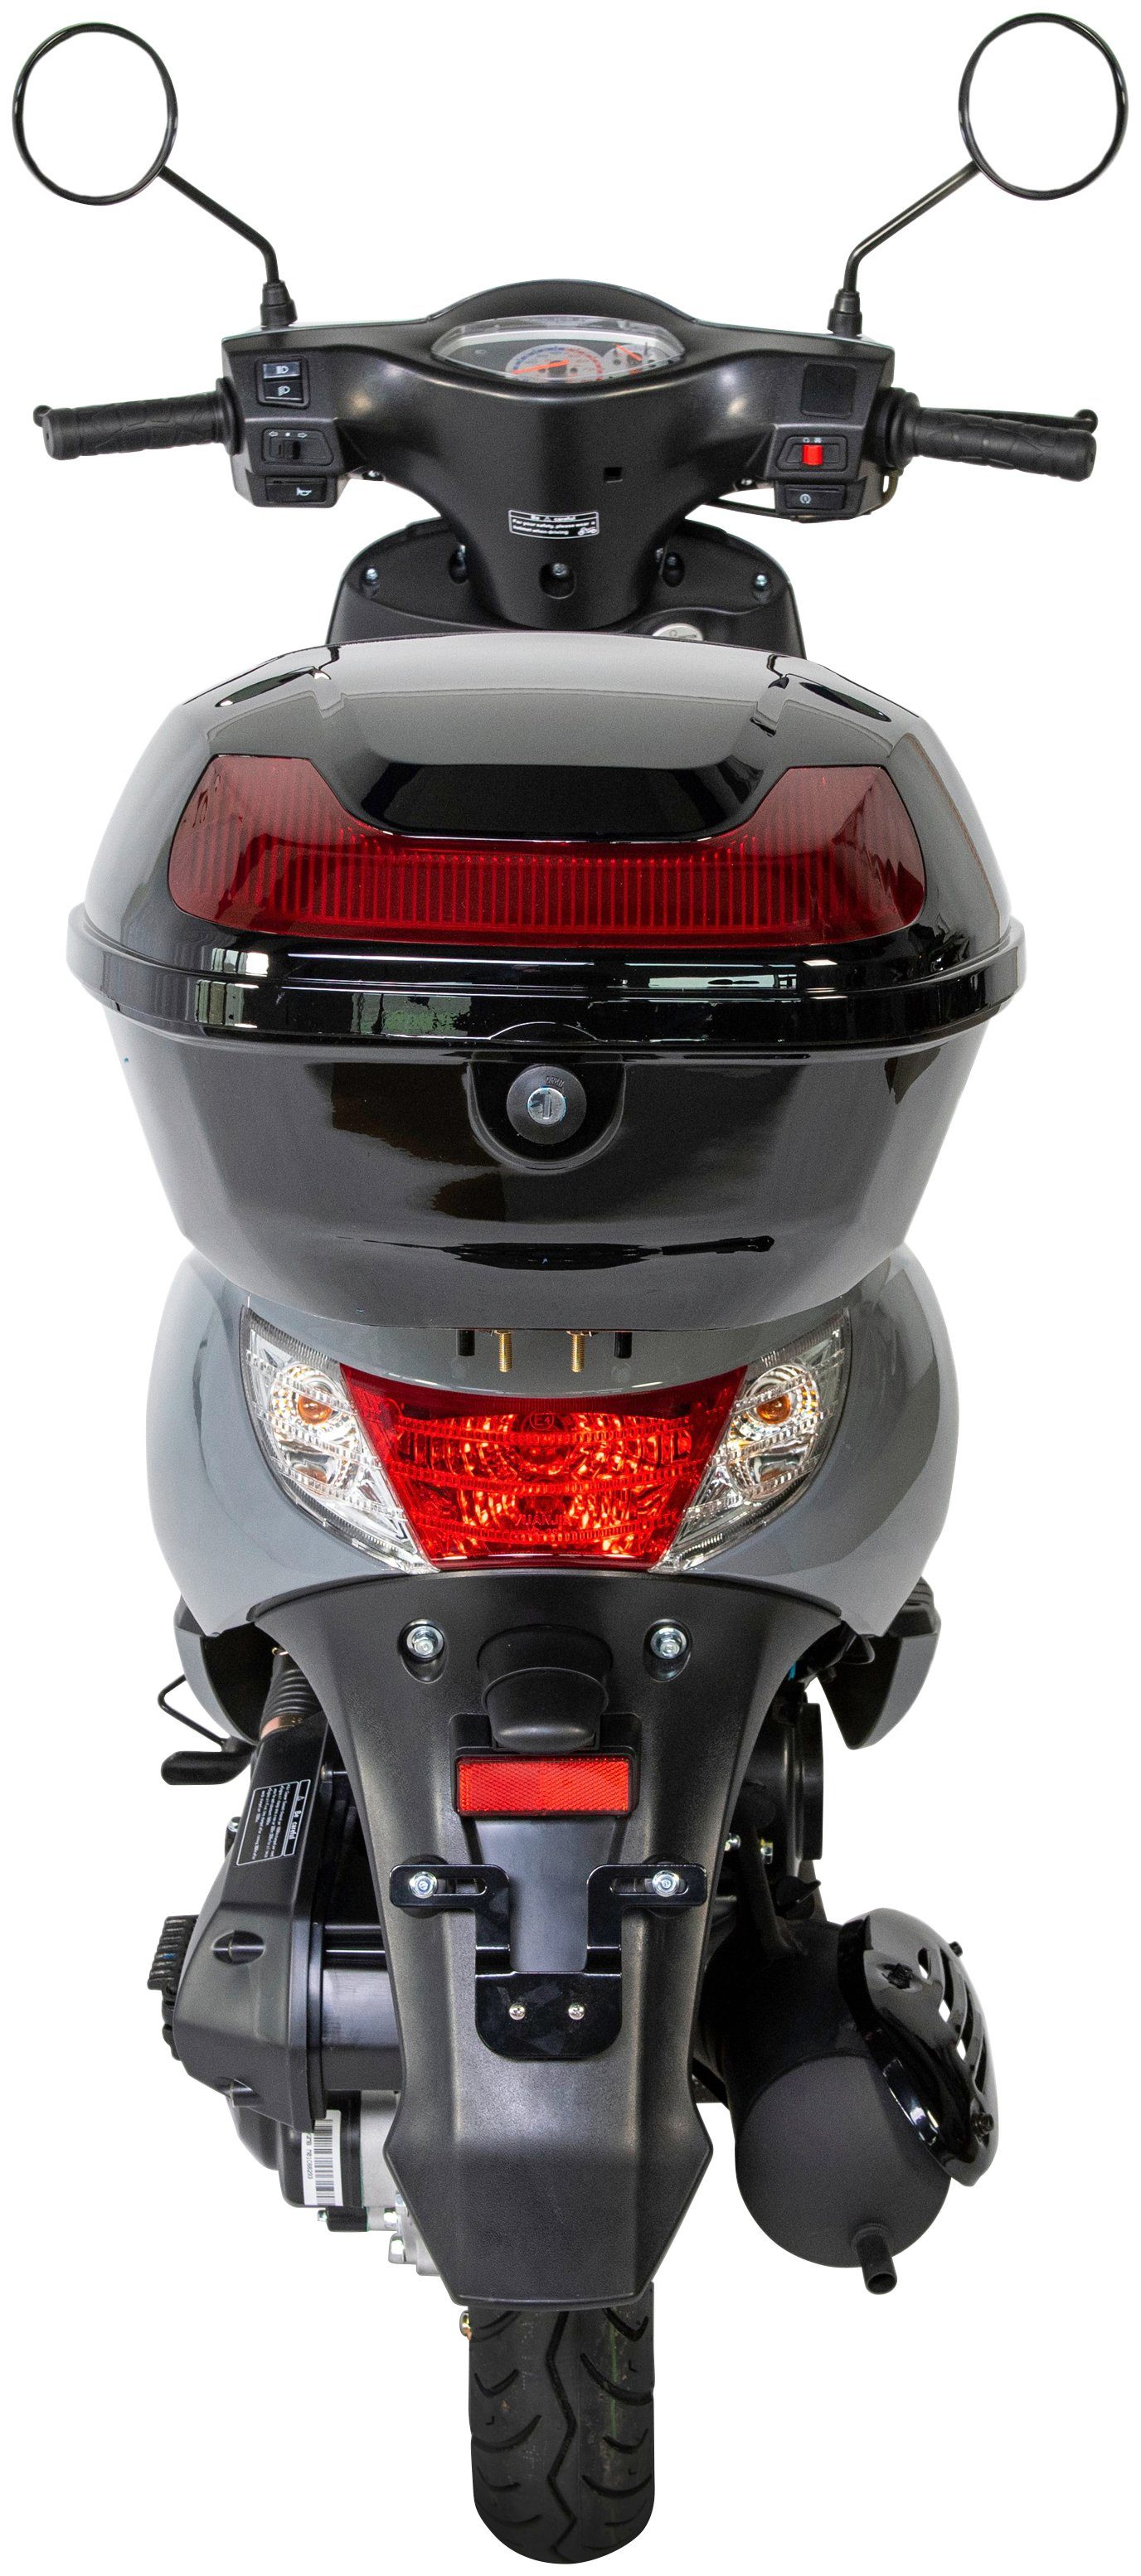 GT UNION Motorroller Matteo 50-45, ccm, Euro inkl. Topcase), tlg., grau, 2 45 mit 50 Topcase km/h, (Komplett-Set, 5, grau